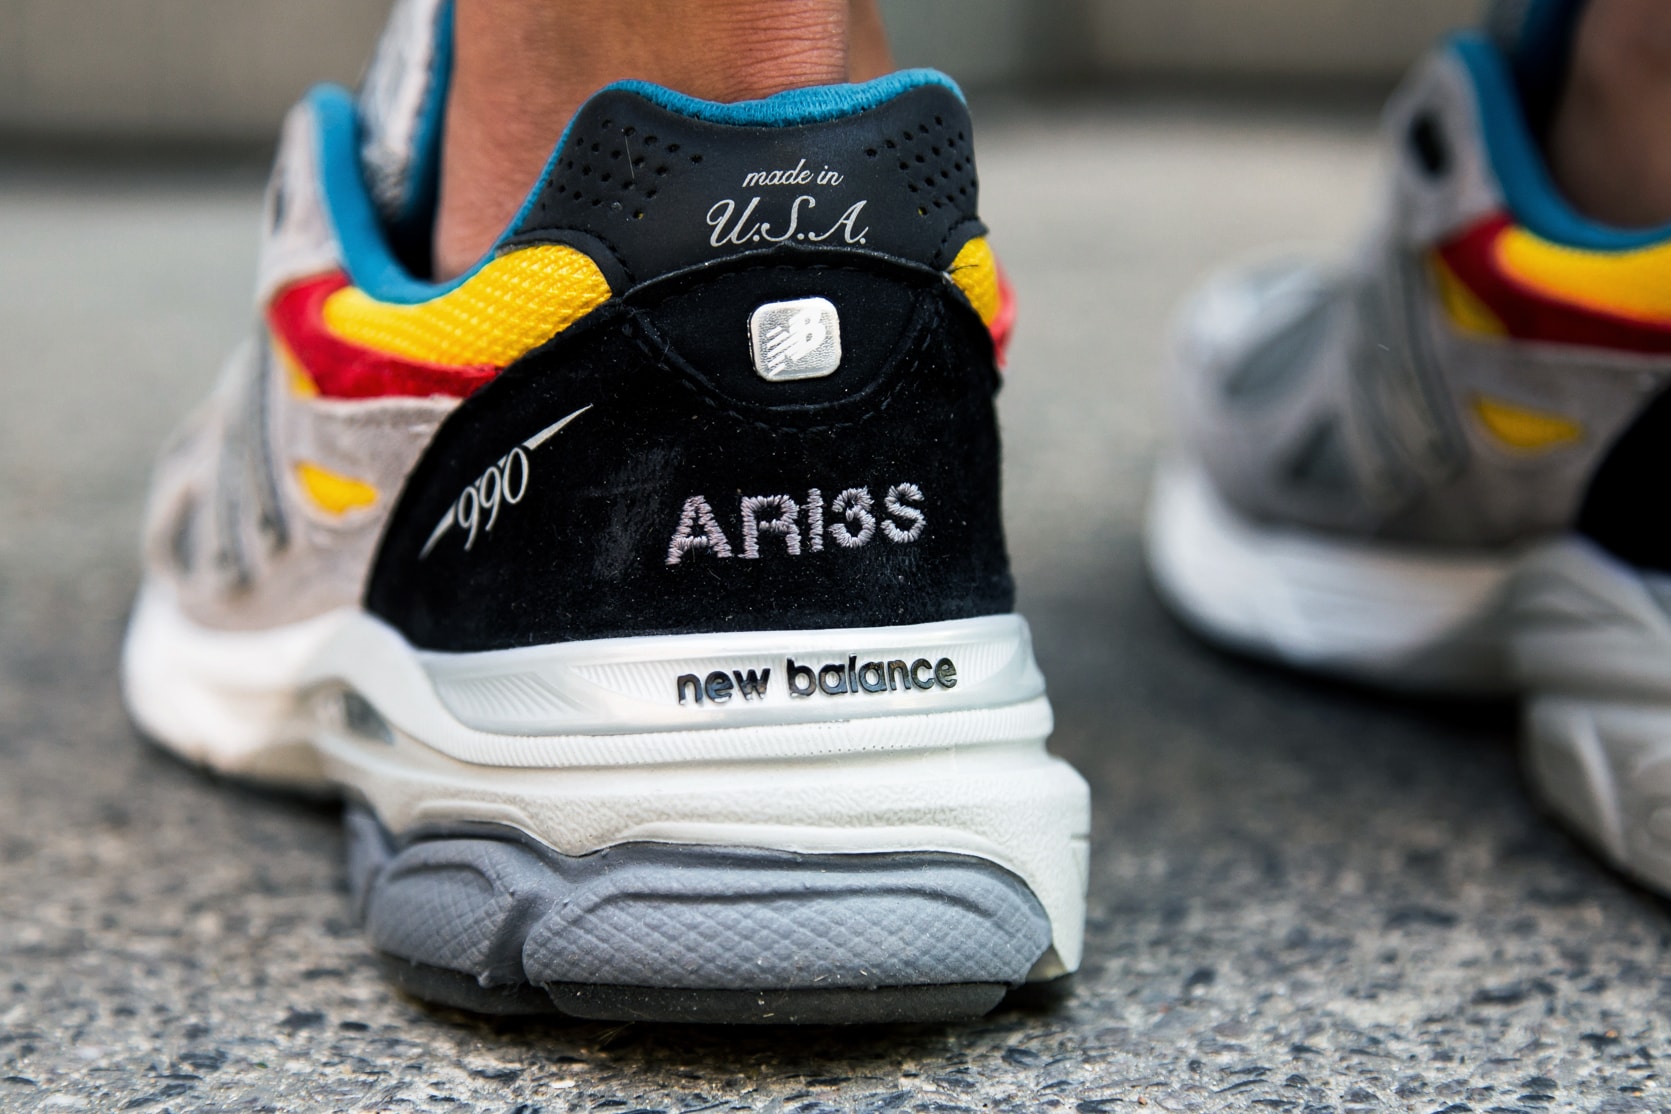 Aries x New Balance 990v3 Retro Dad Sneaker Collaboration 2018